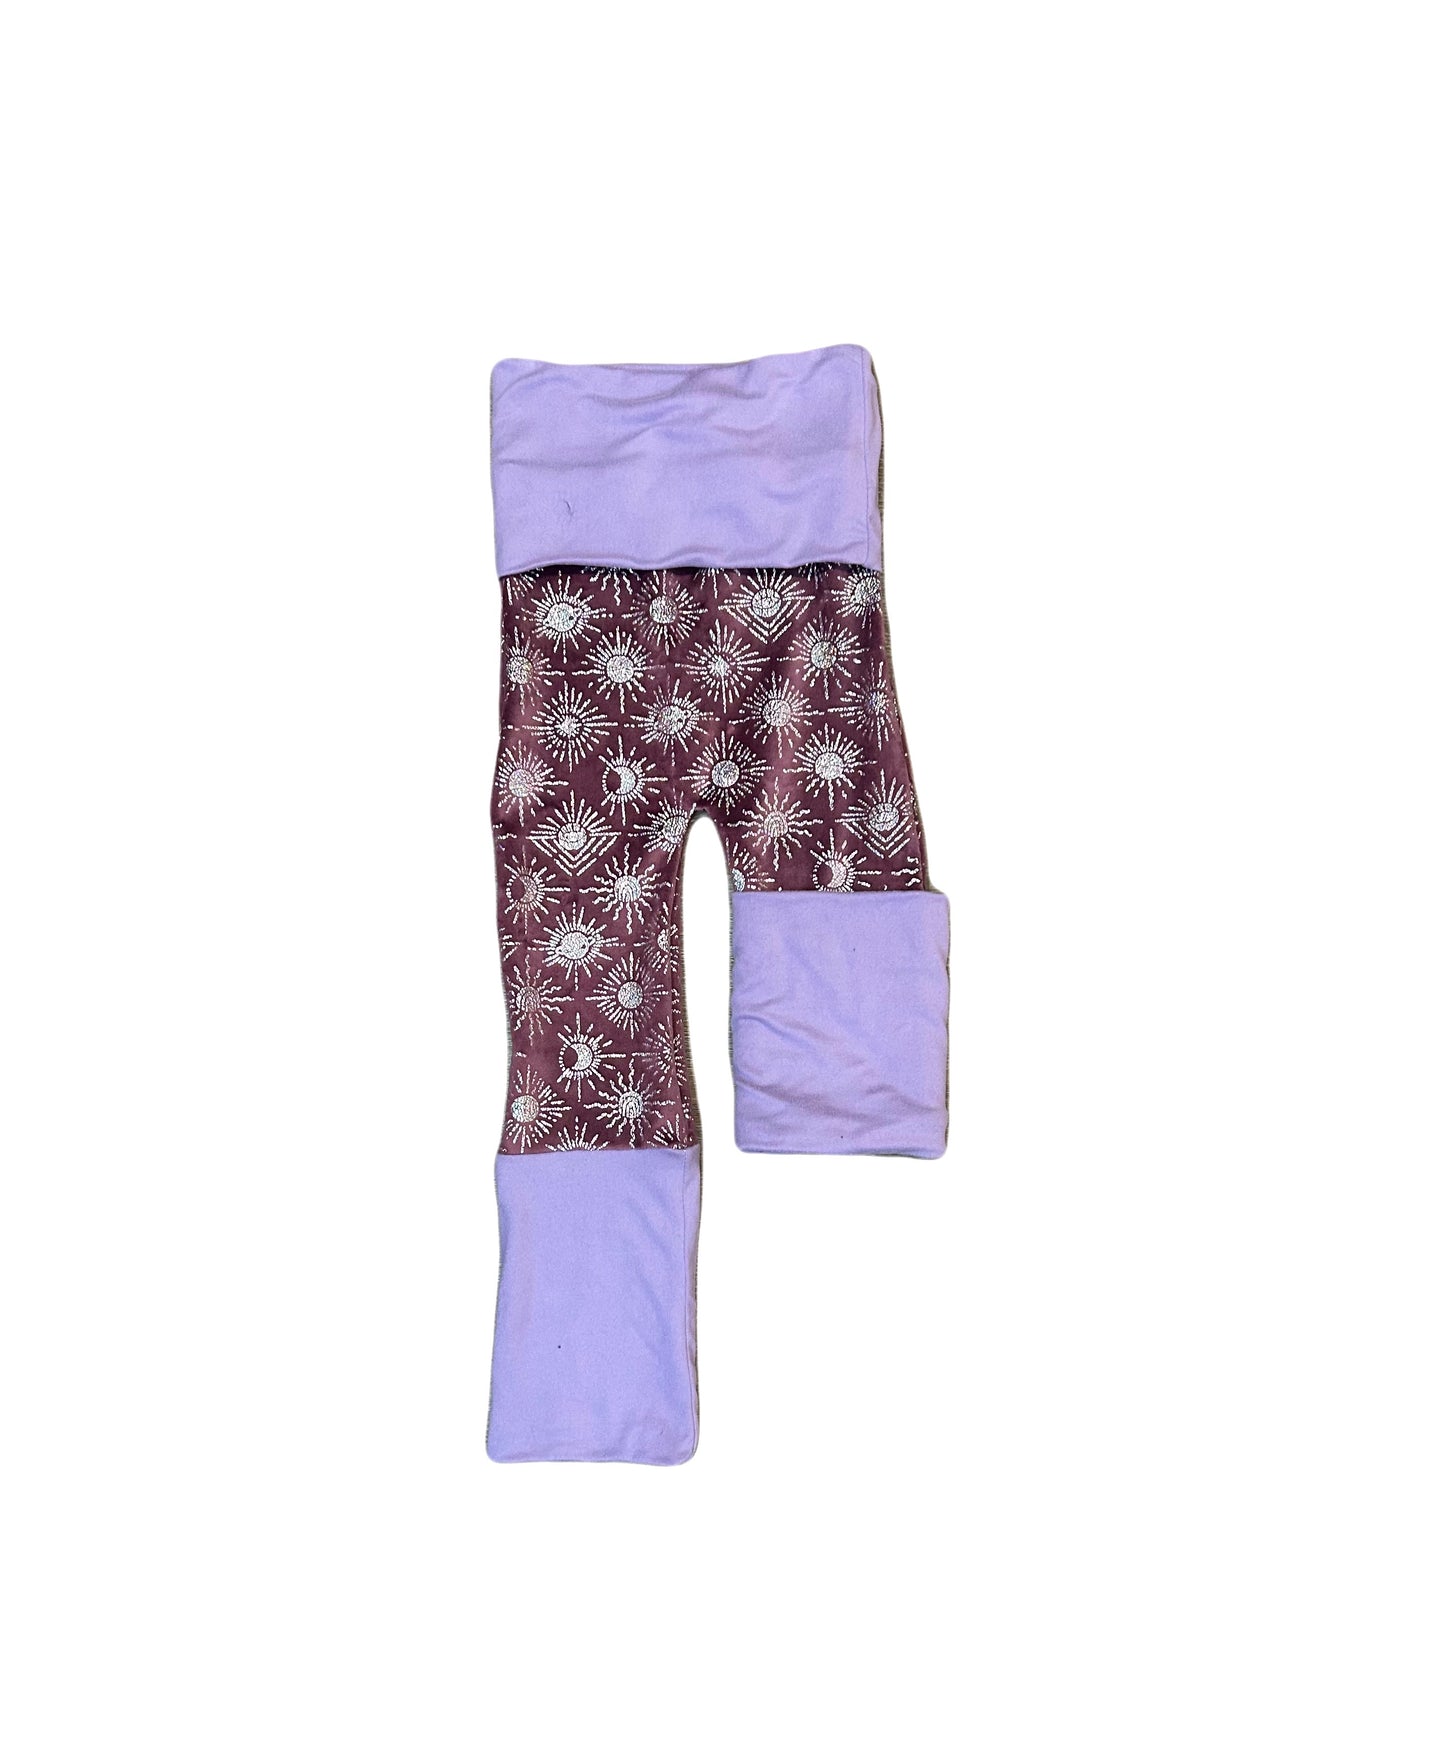 Adjustable pants - purple star bursts with lavender